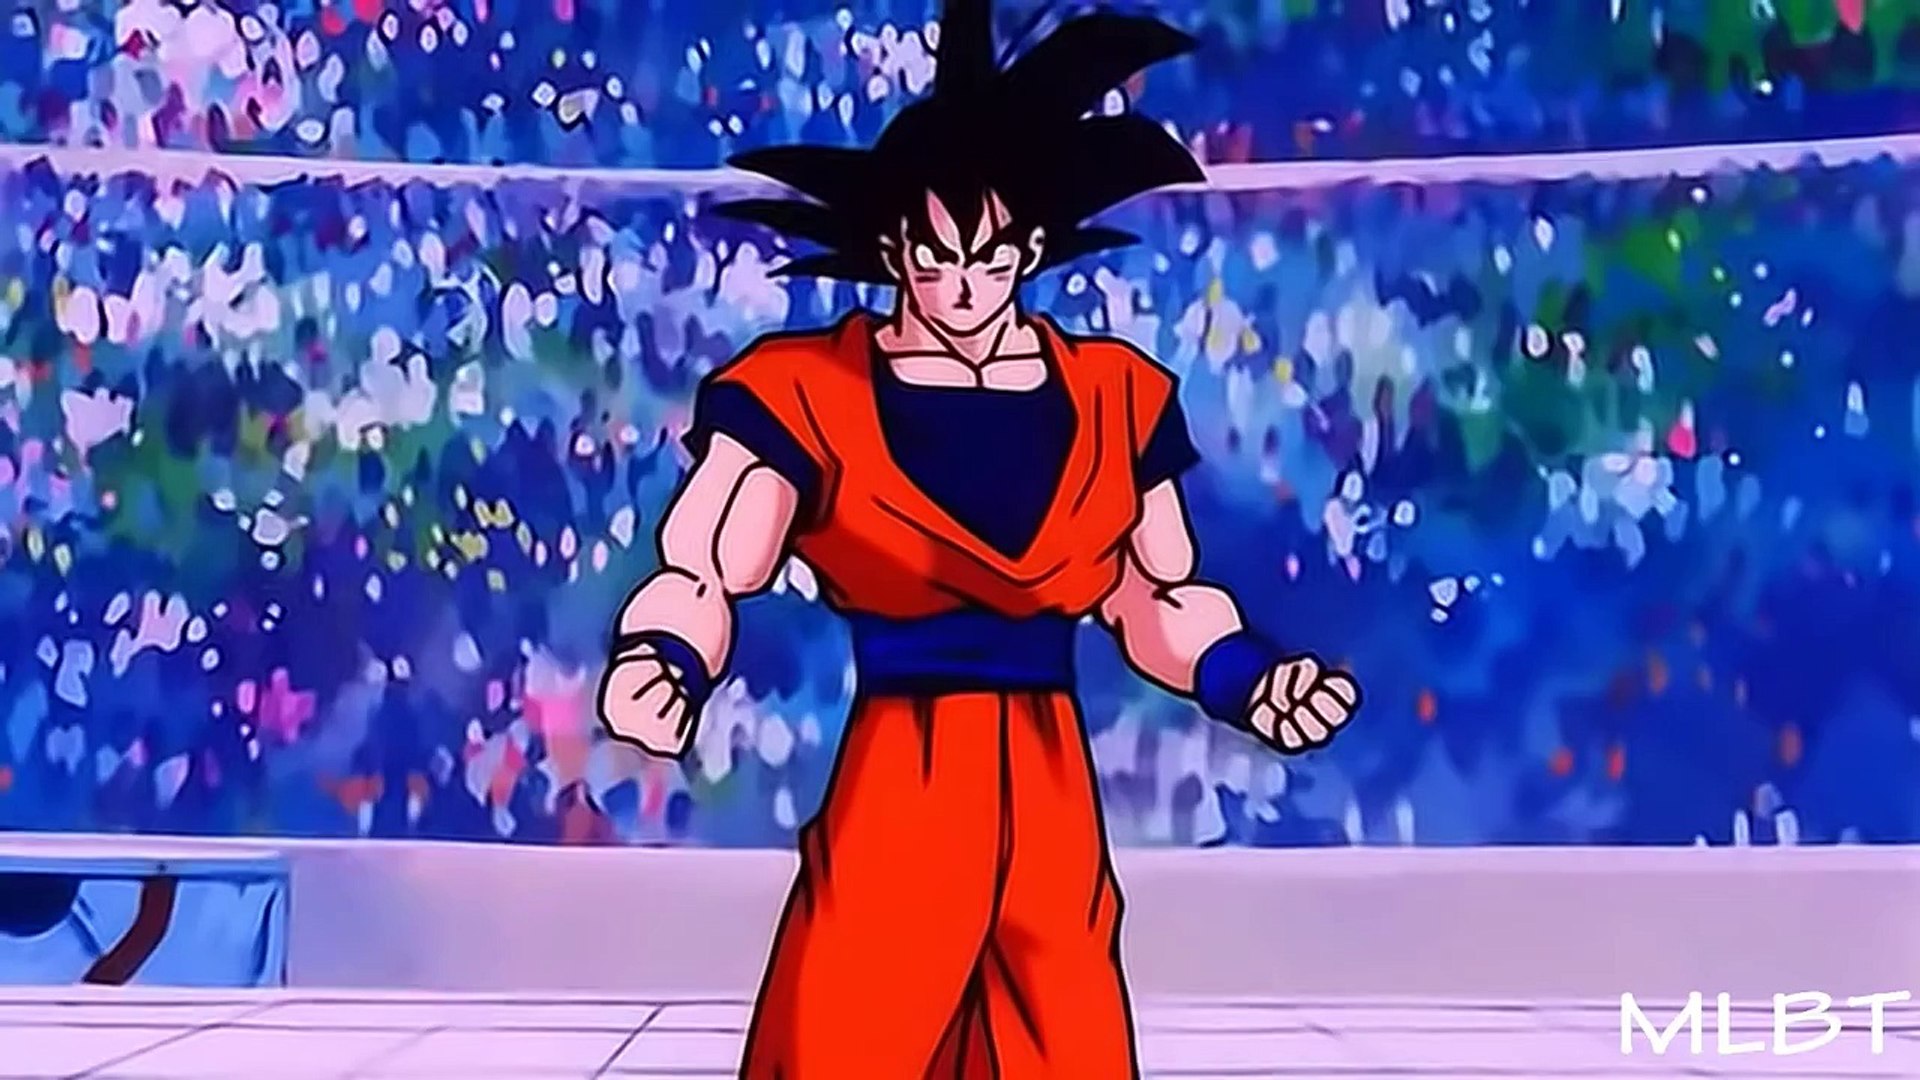 DBZ Goku vs Pikkon Part 2/5 - video Dailymotion